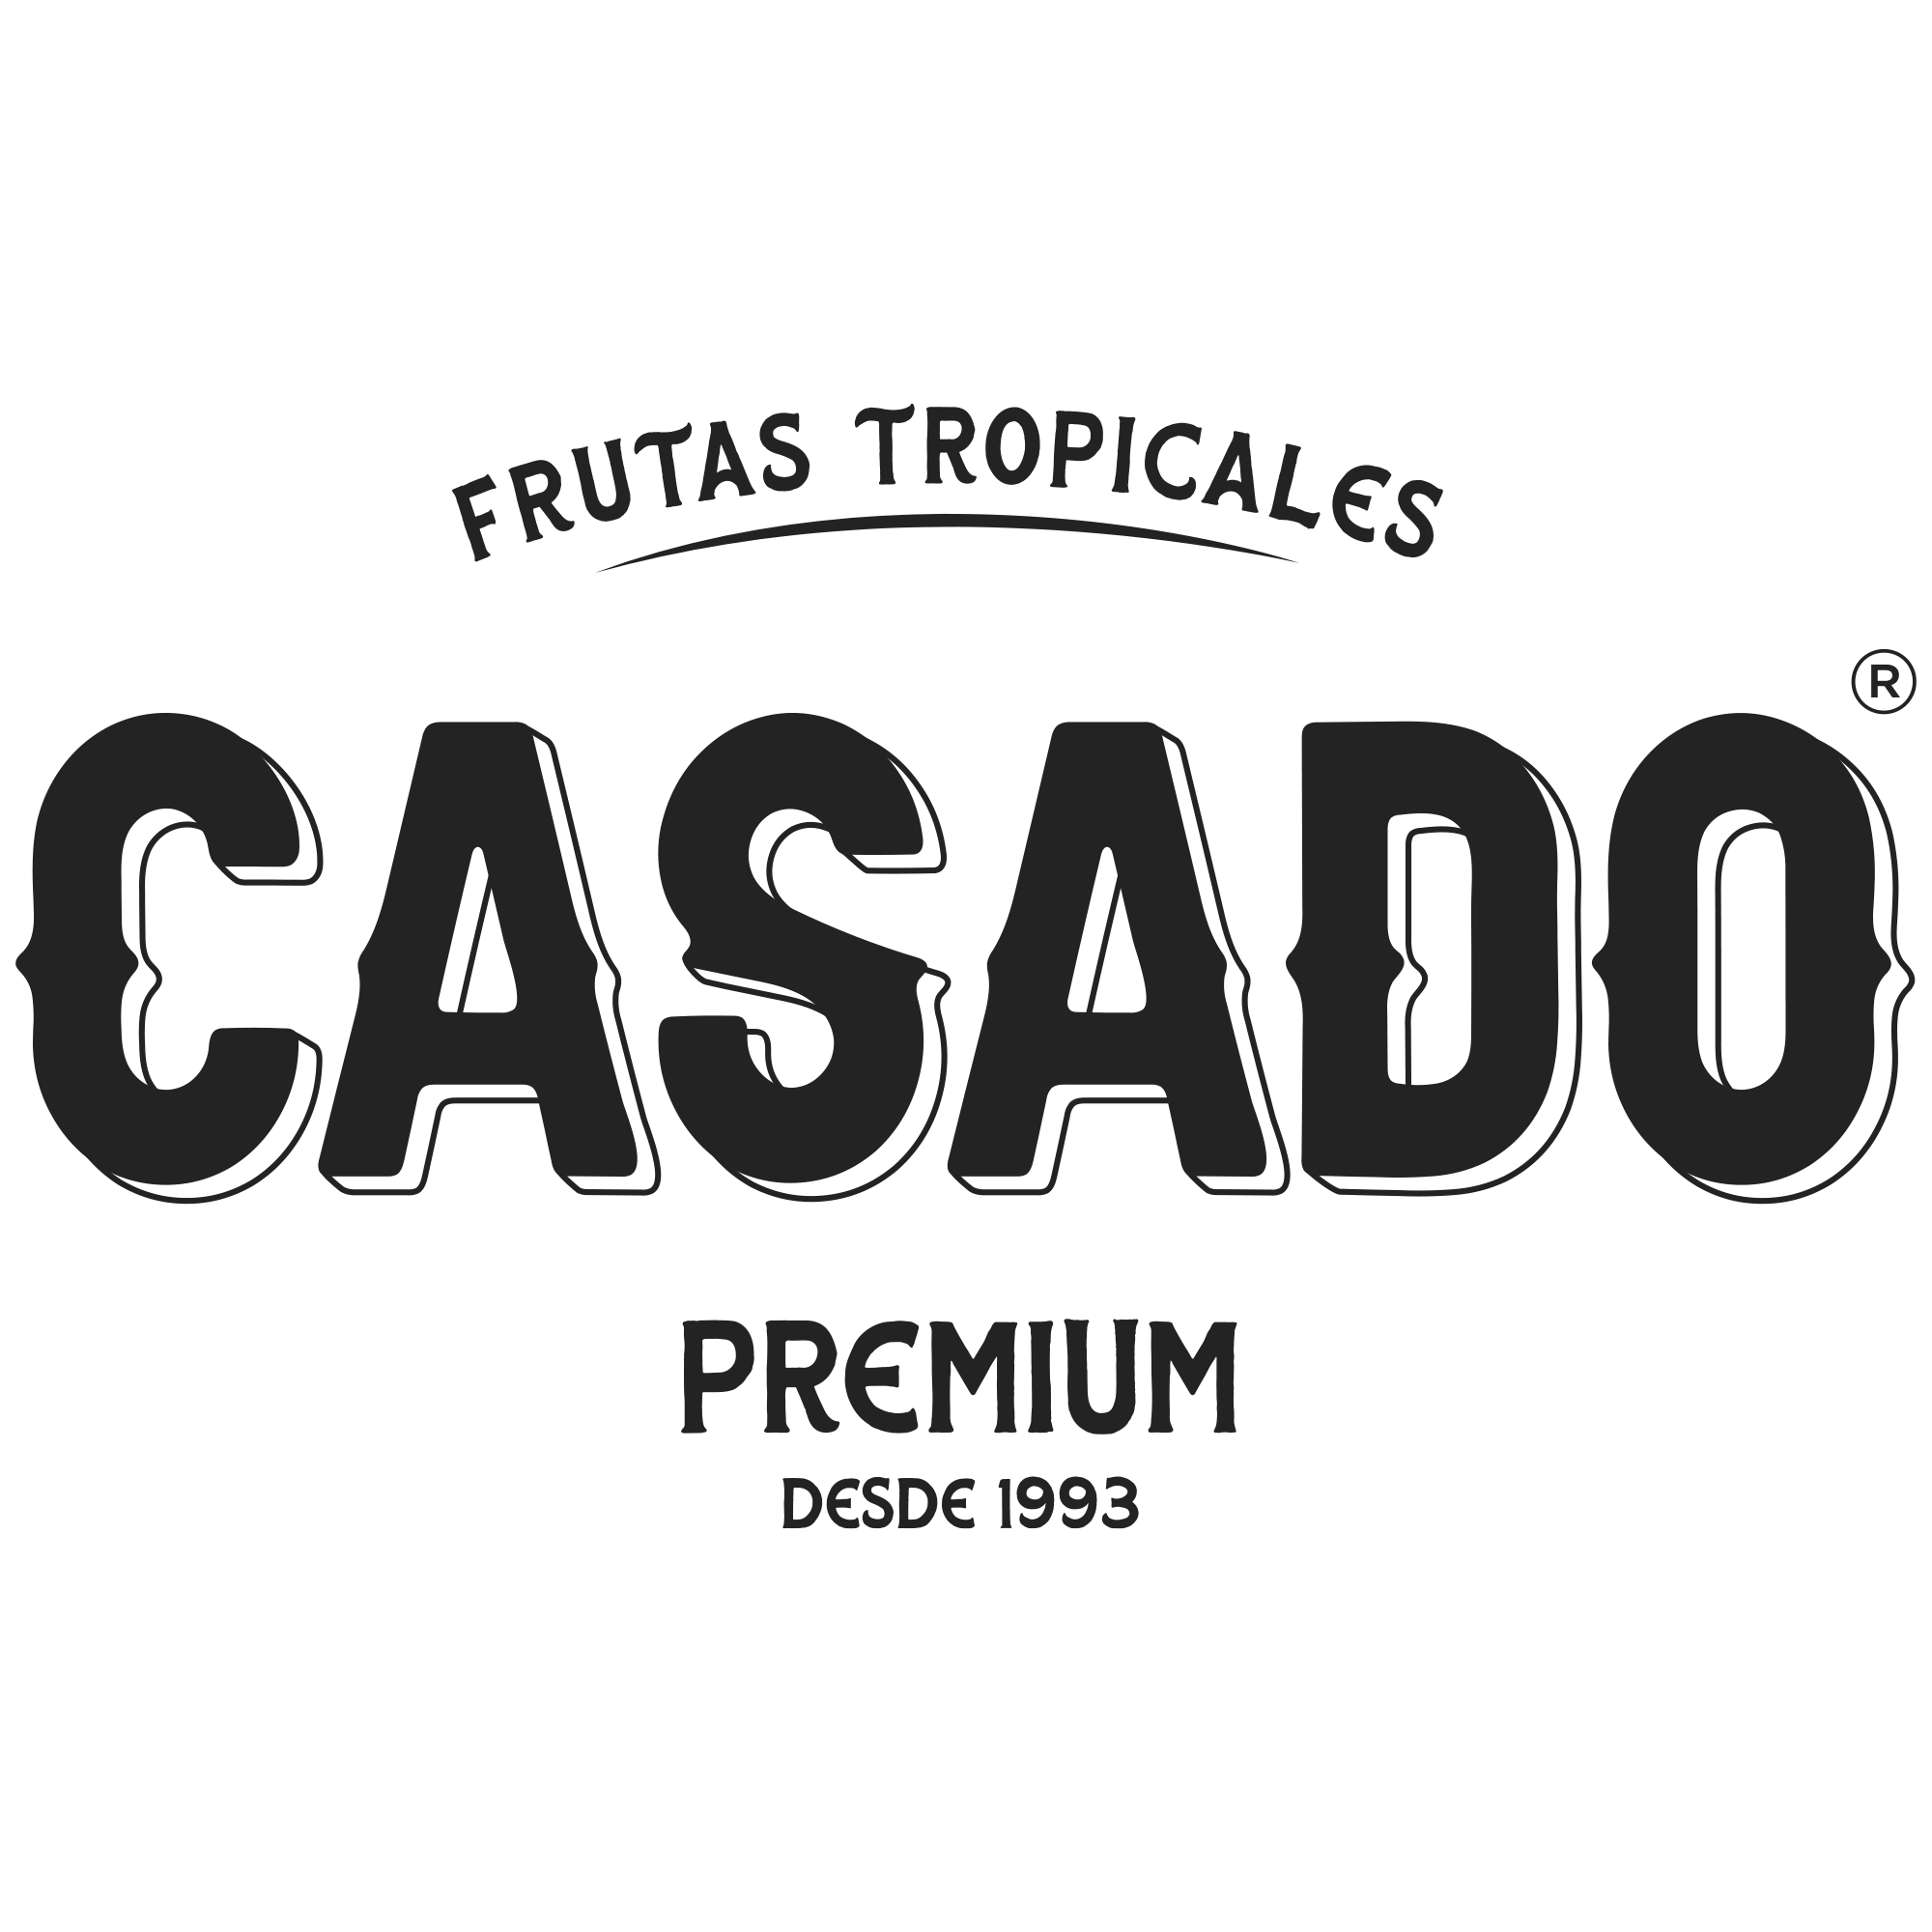 Casado_Premium_Logo